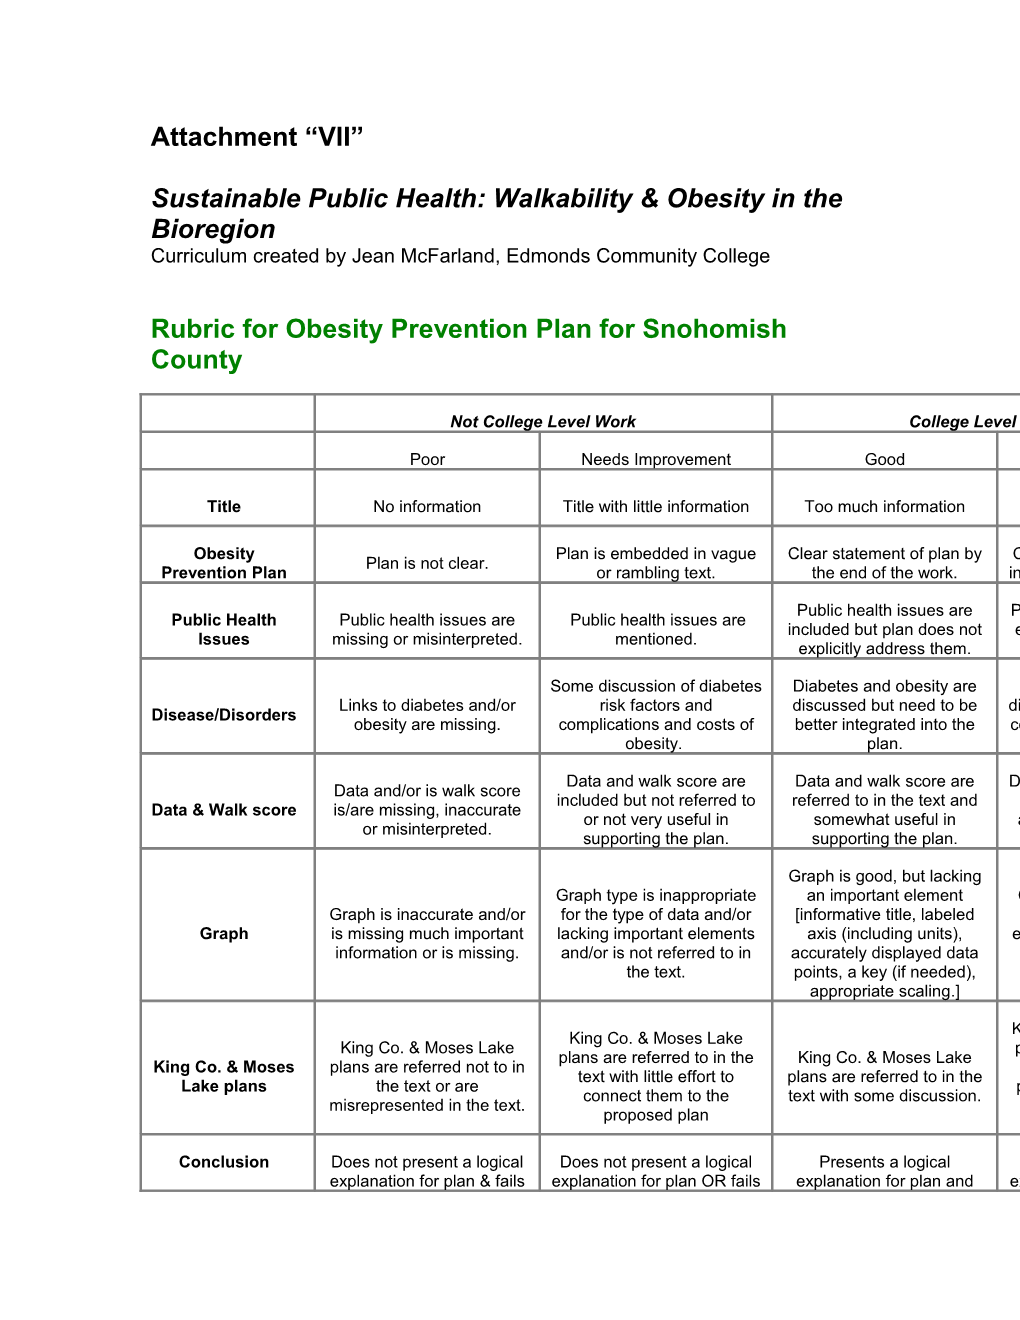 Sustainable Public Health: Walkability & Obesity in the Bioregion